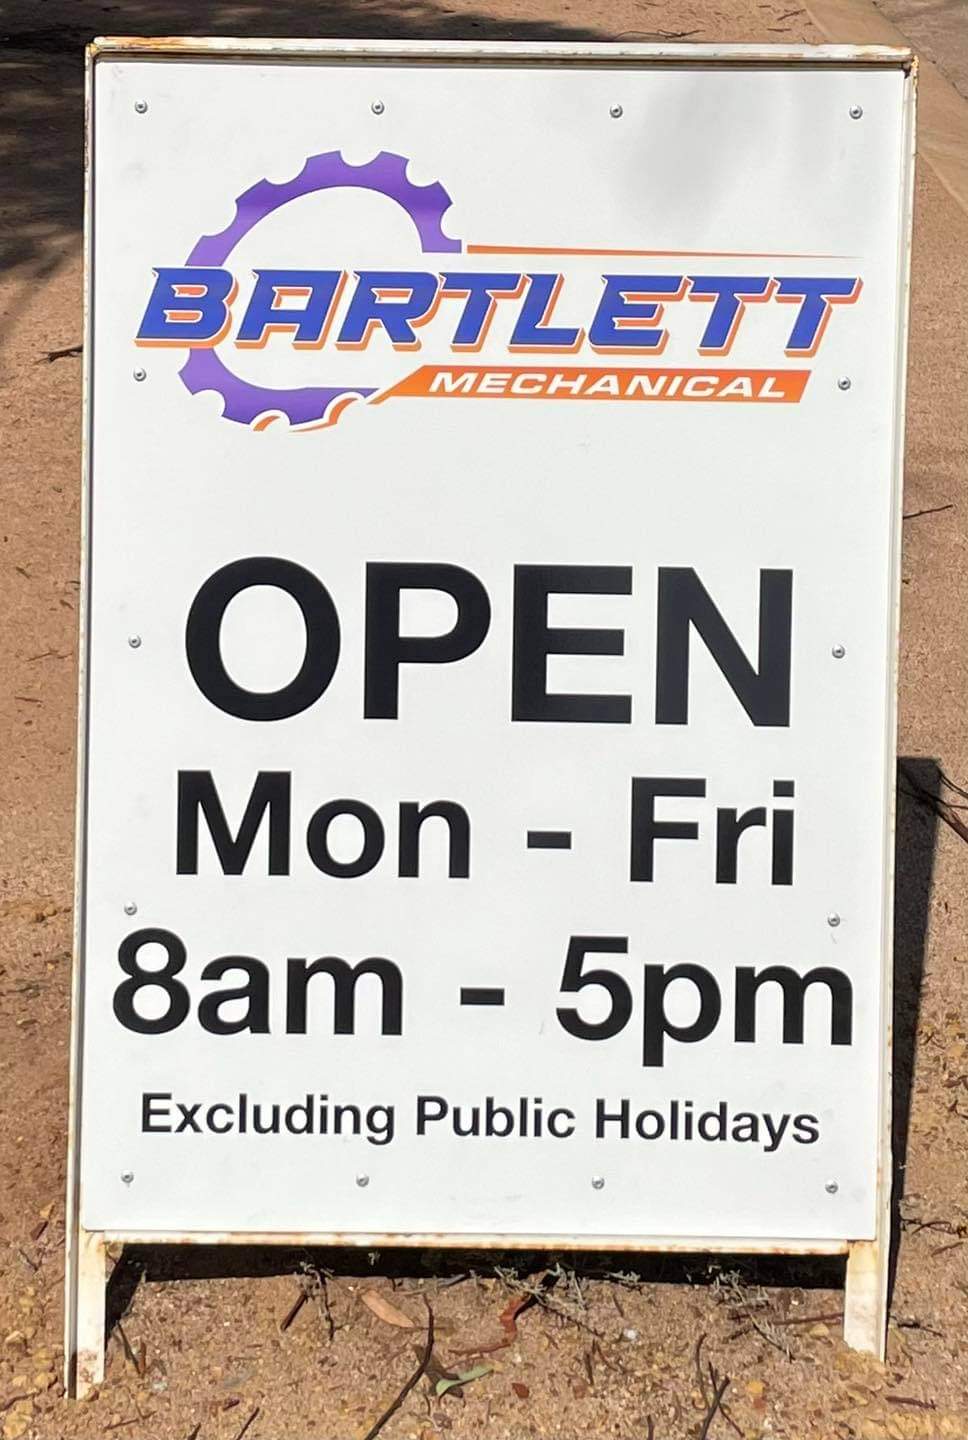 Bartlett Mechanical | car repair | 100 Mitchell St, Merredin WA 6415, Australia | 0409932900 OR +61 409 932 900